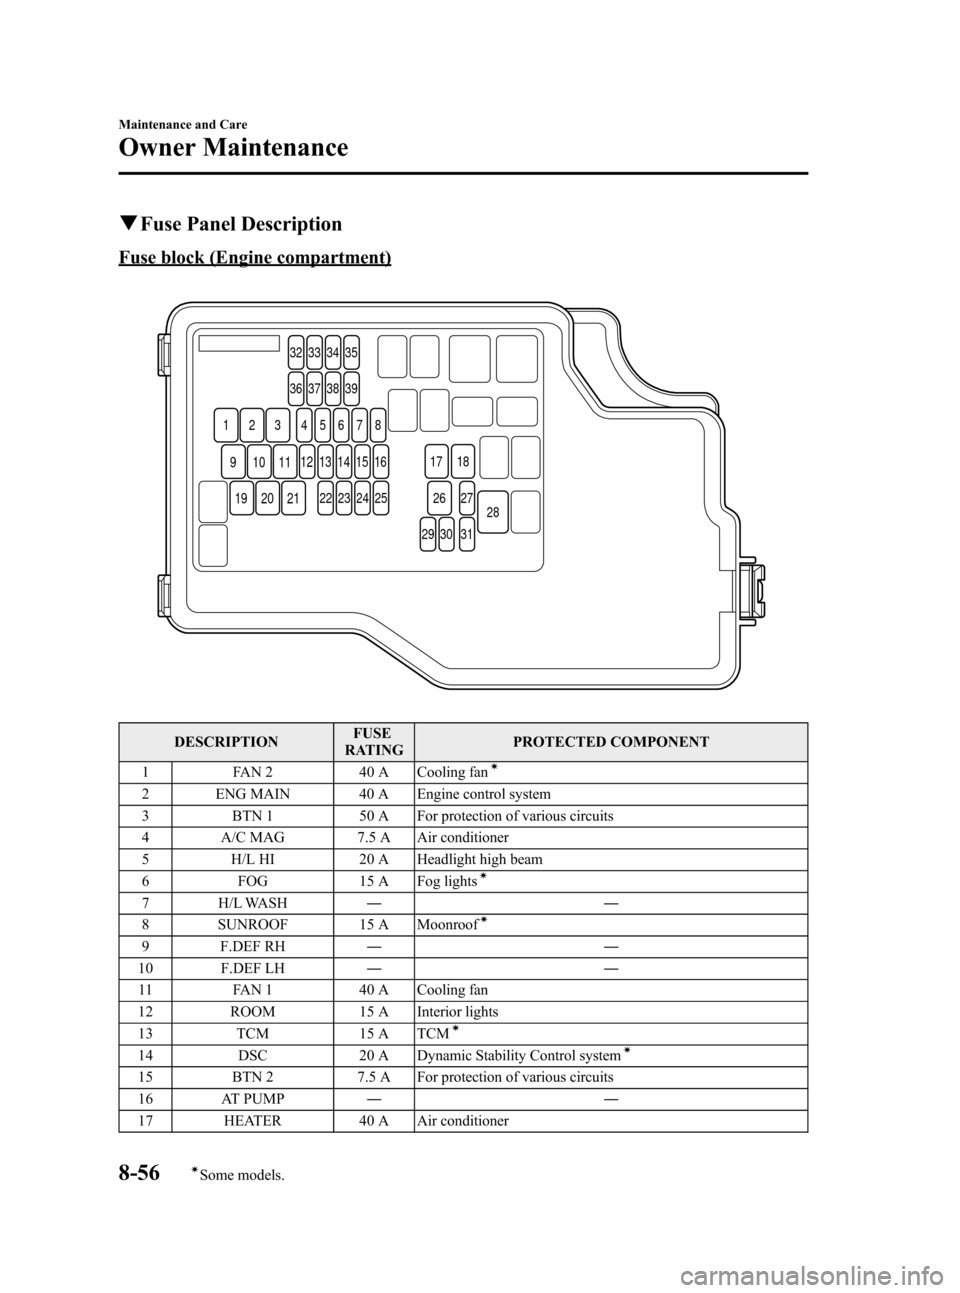 MAZDA MODEL 3 HATCHBACK 2011  Owners Manual (in English) Black plate (428,1)
qFuse Panel Description
Fuse block (Engine compartment)
32 33 34 35
36 37 38 39
54
1 2 3 678
1312 14 15 16
22
11109
212019
23 24 25
29 30 3127
28
26
17 18
DESCRIPTION
FUSE
RATING P